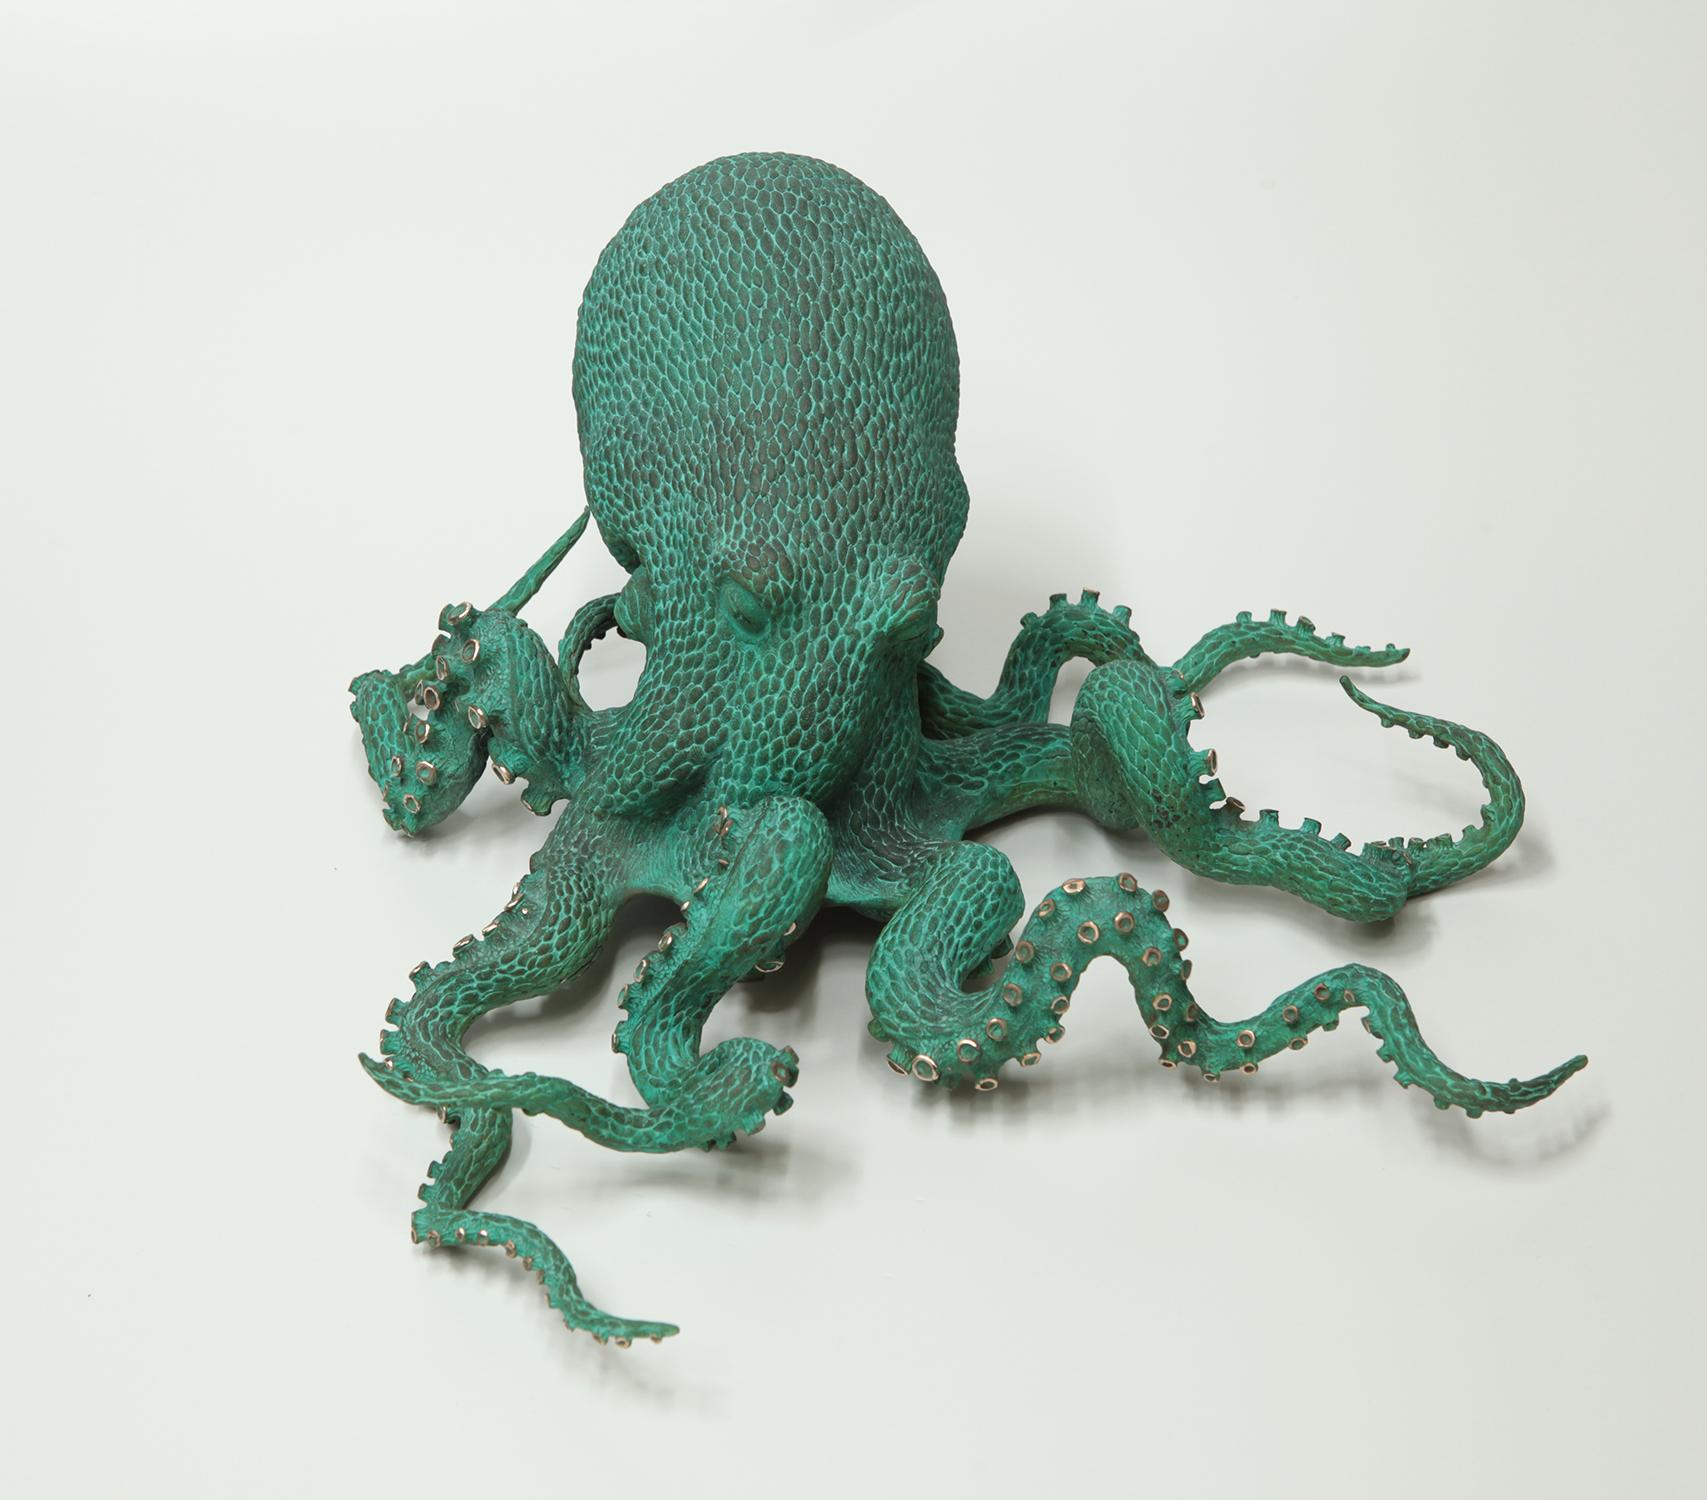 octopus sculpture uk